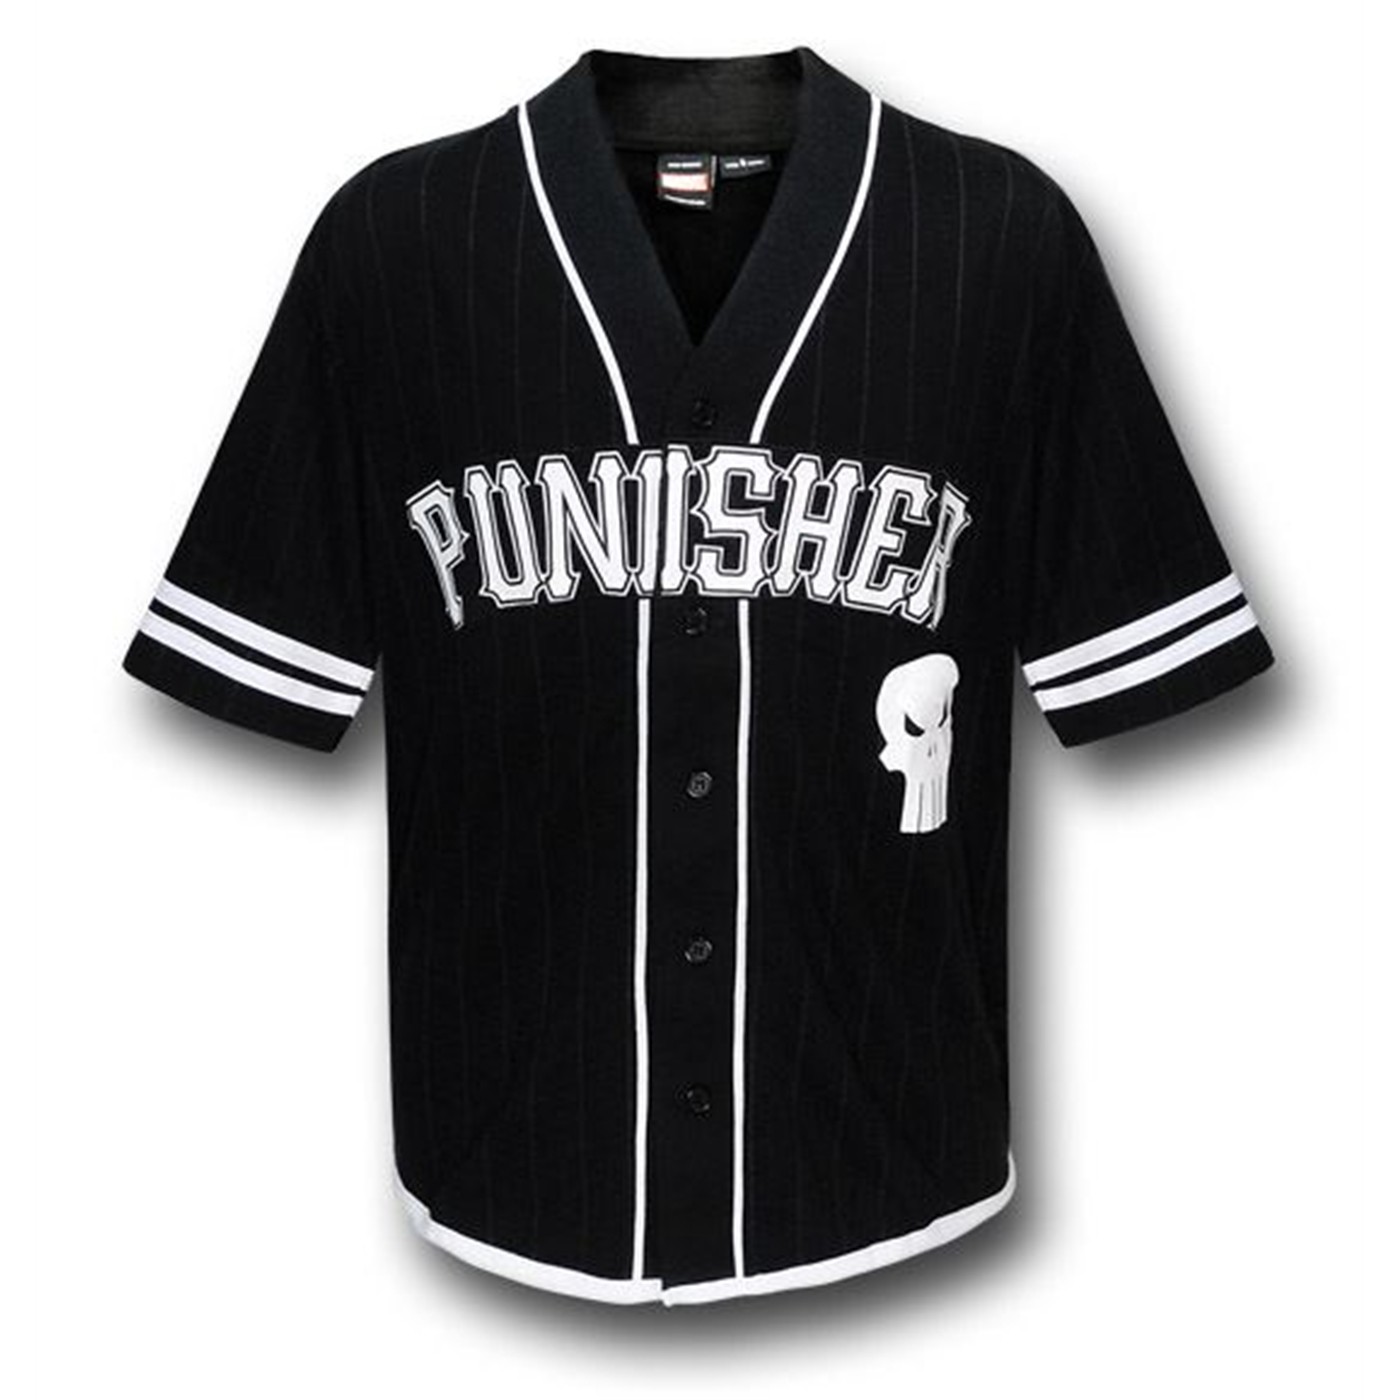 punisher baseball jersey